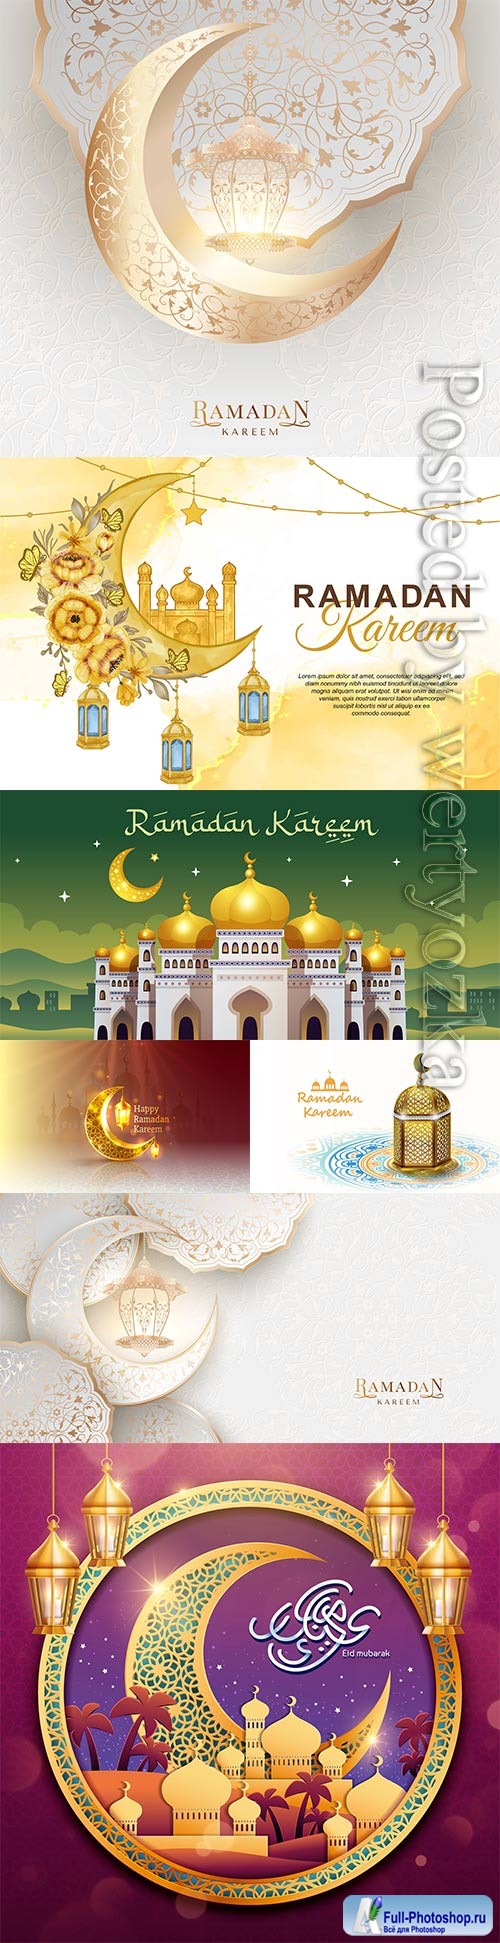 Ramadan kareem greeting card with islamic moon arabesque and lantern